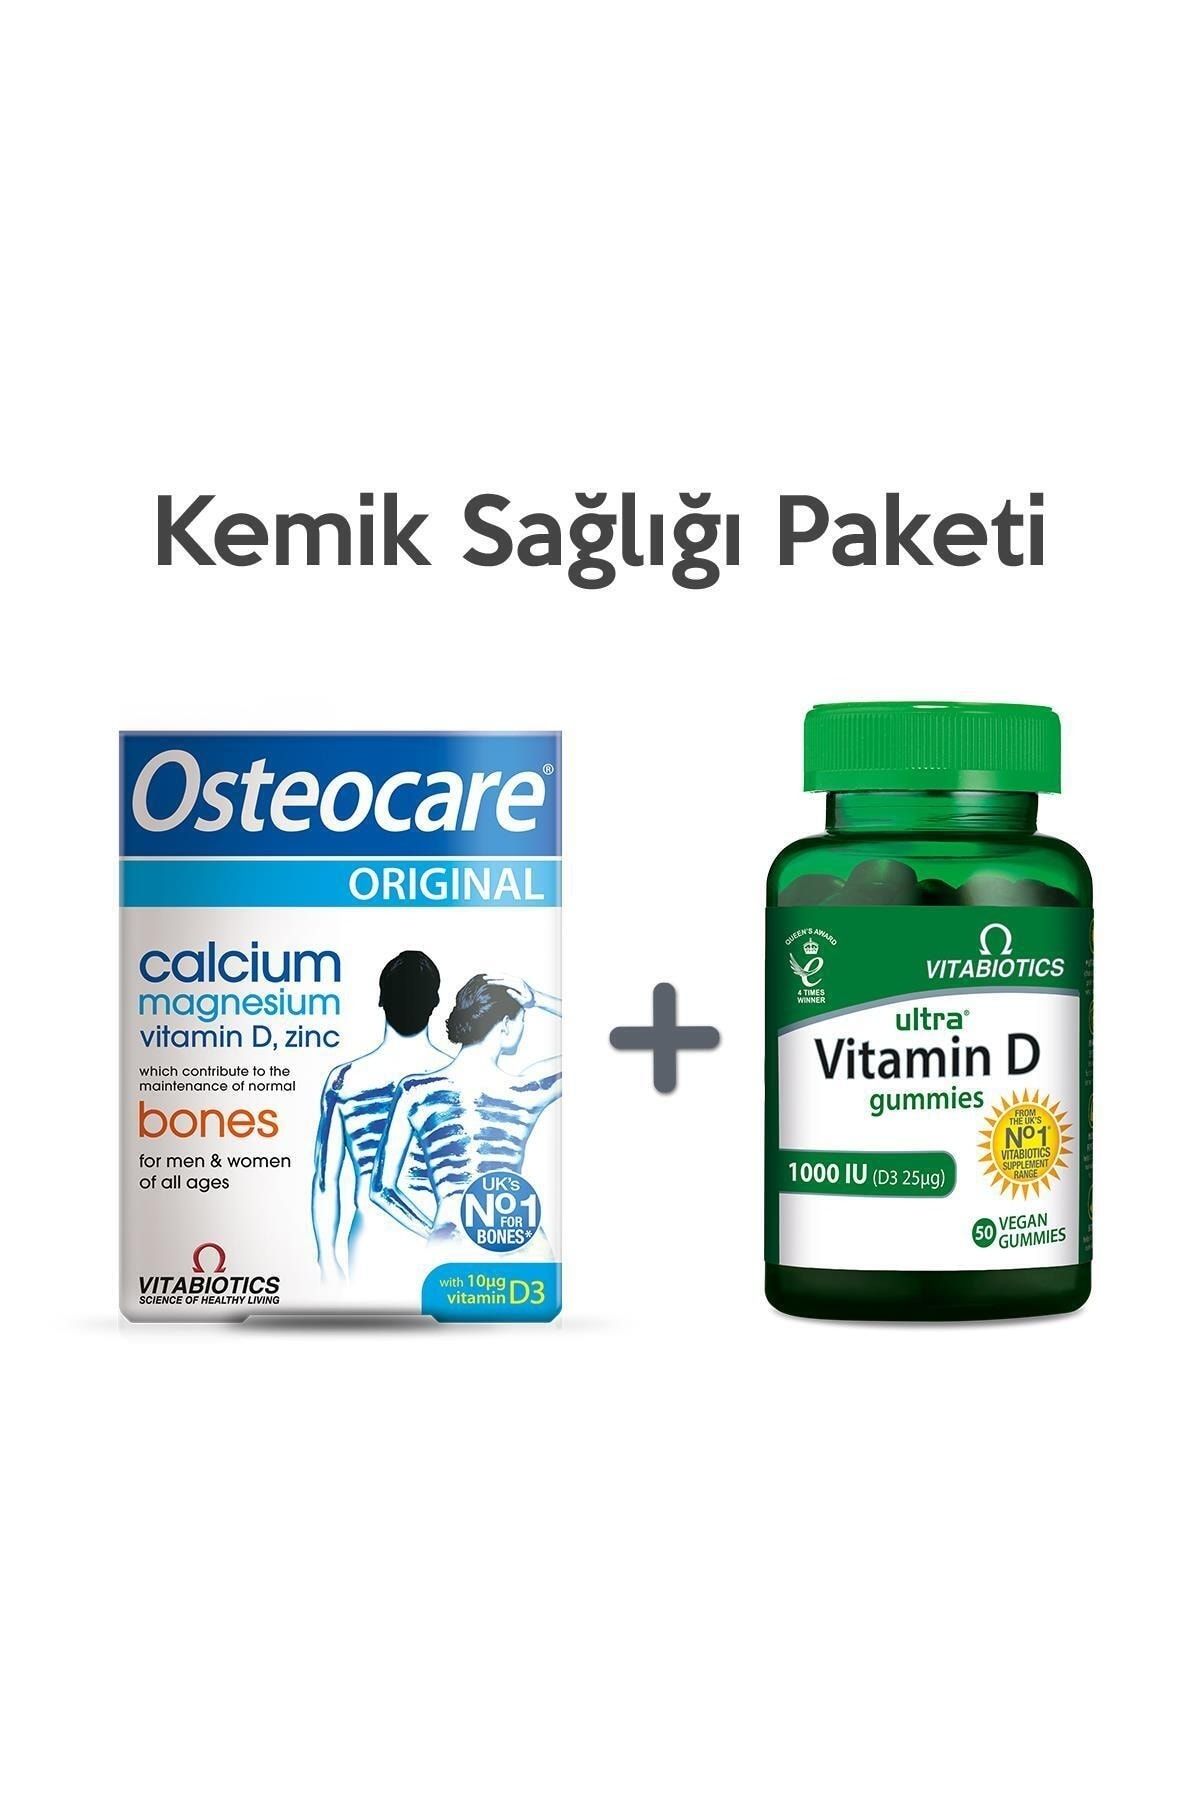 Osteocare 90 Tablet Ultra Vitamin D Gummies - Kemik Sağlığı Paketi